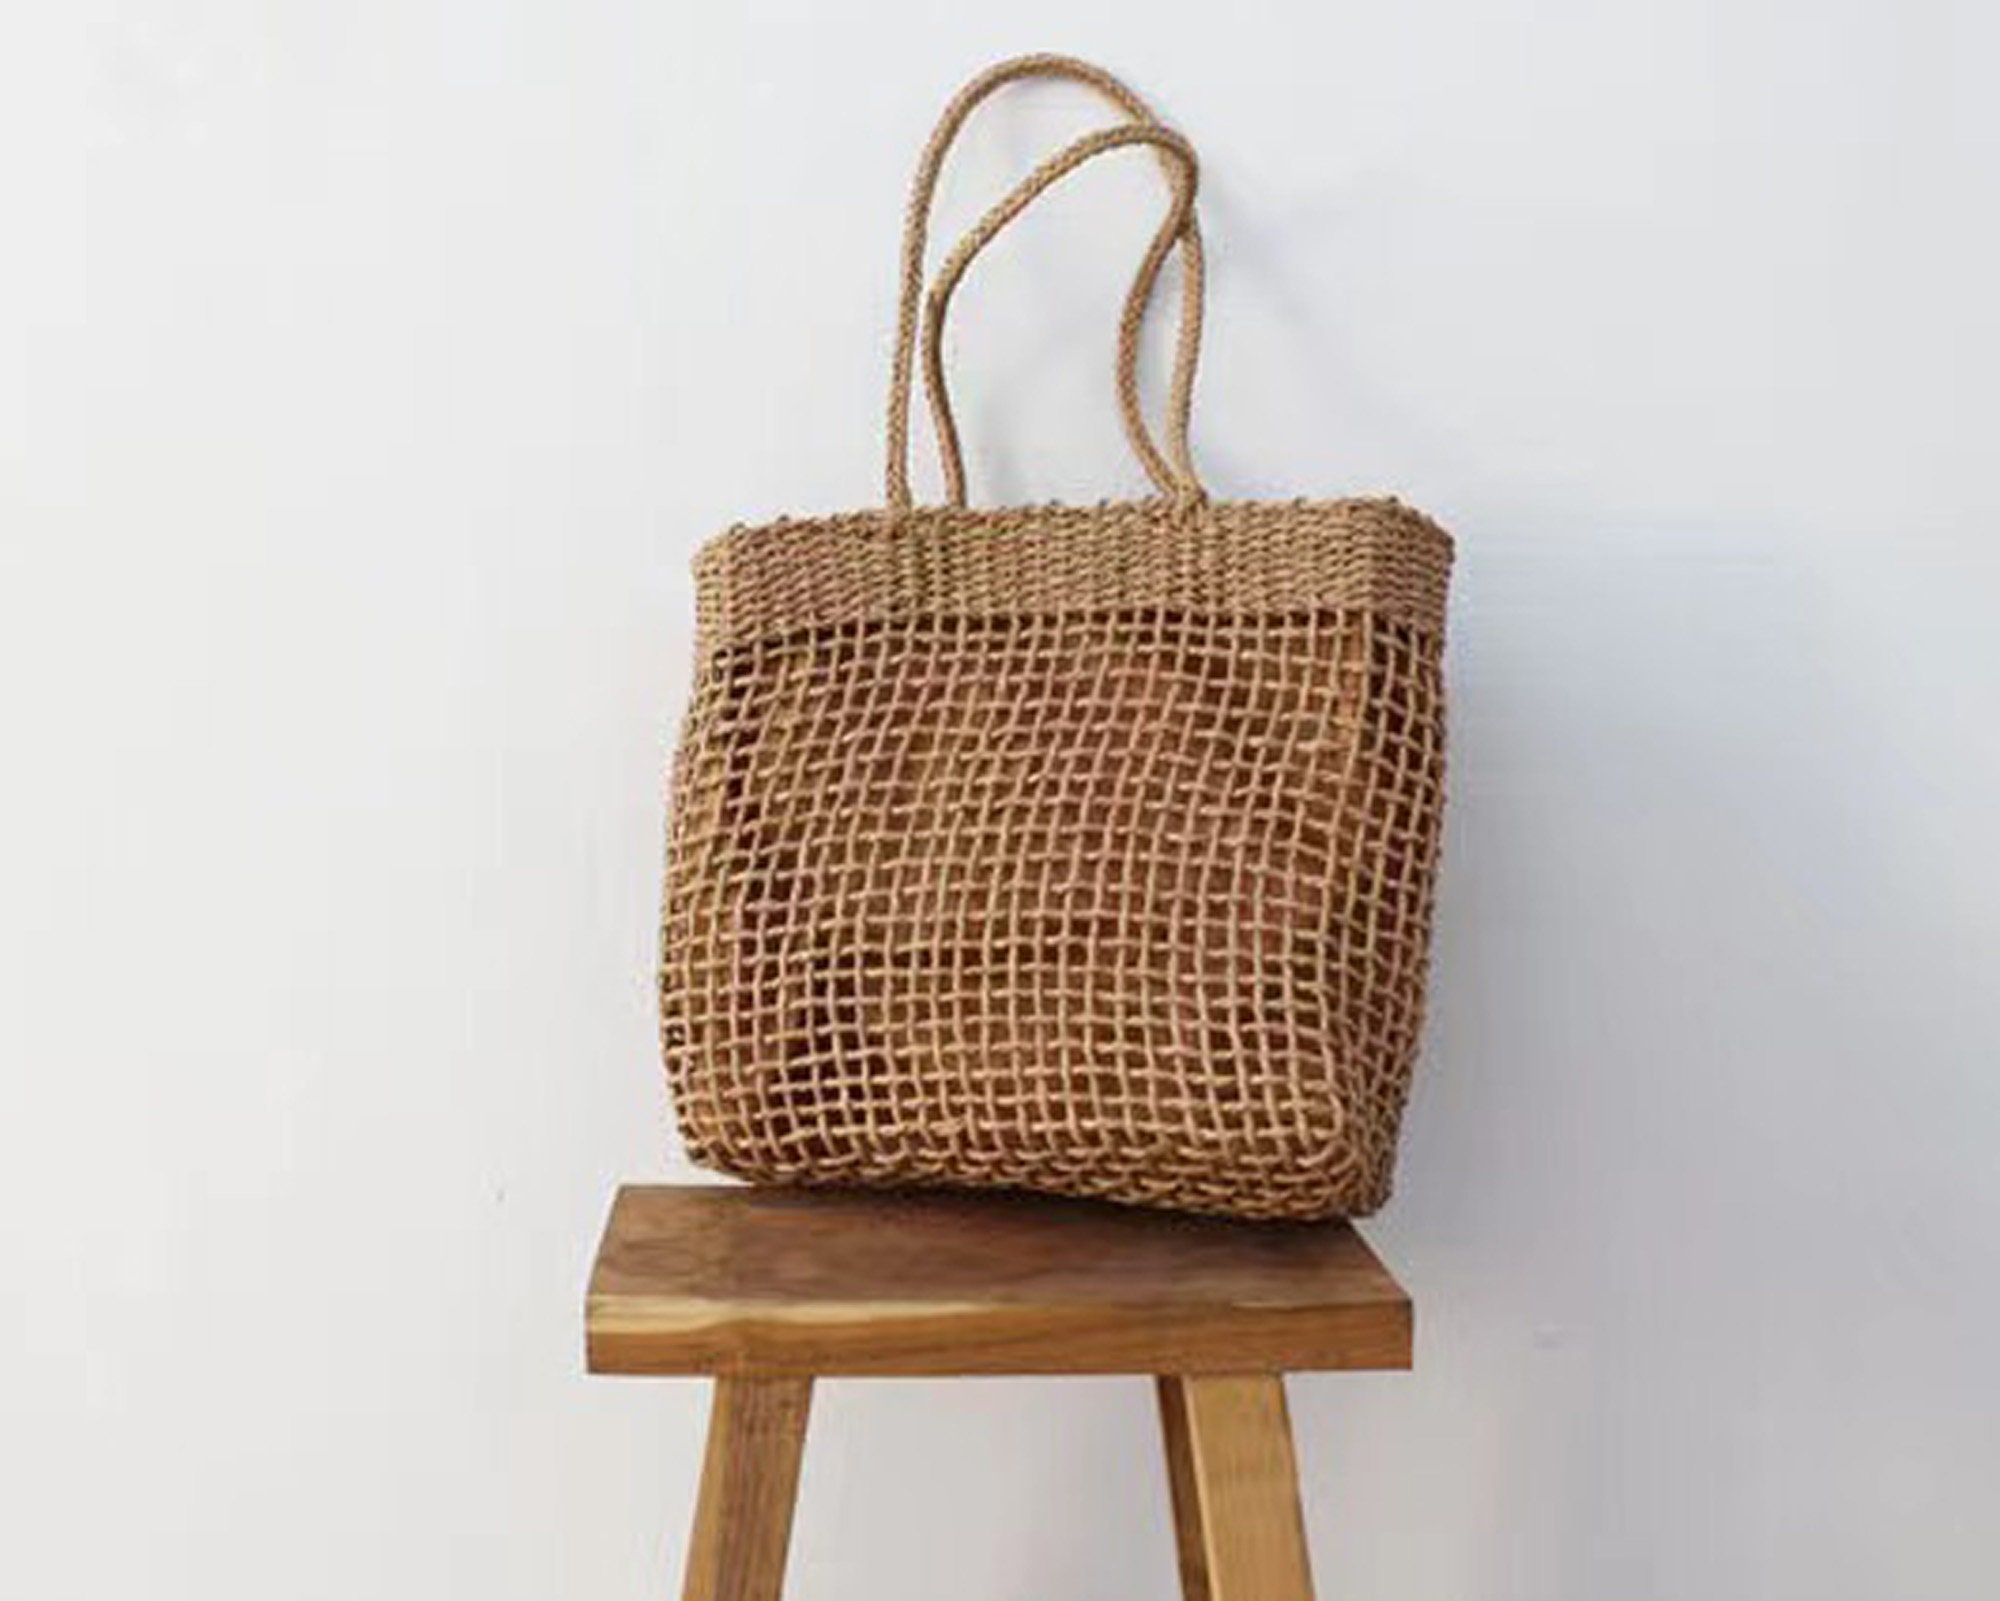 Totes bags Loewe - Basket Animals small straw tote bag - 30350S937100